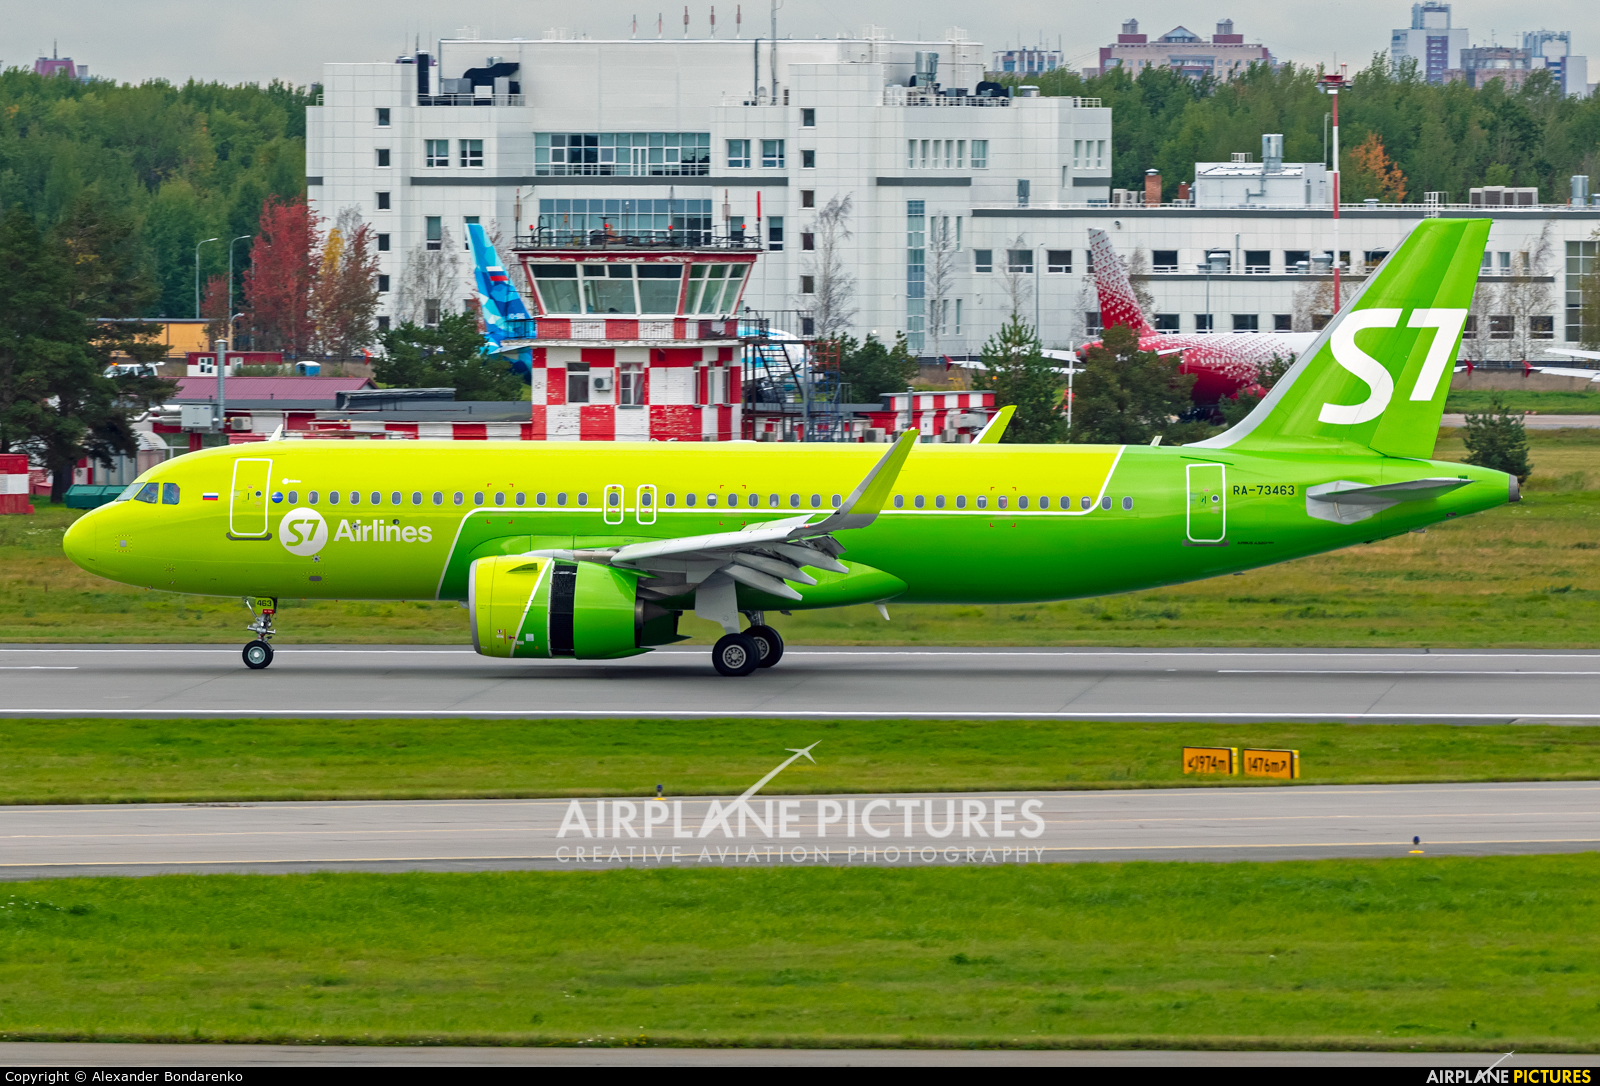 S7 Airlines RA-73463 aircraft at St. Petersburg - Pulkovo